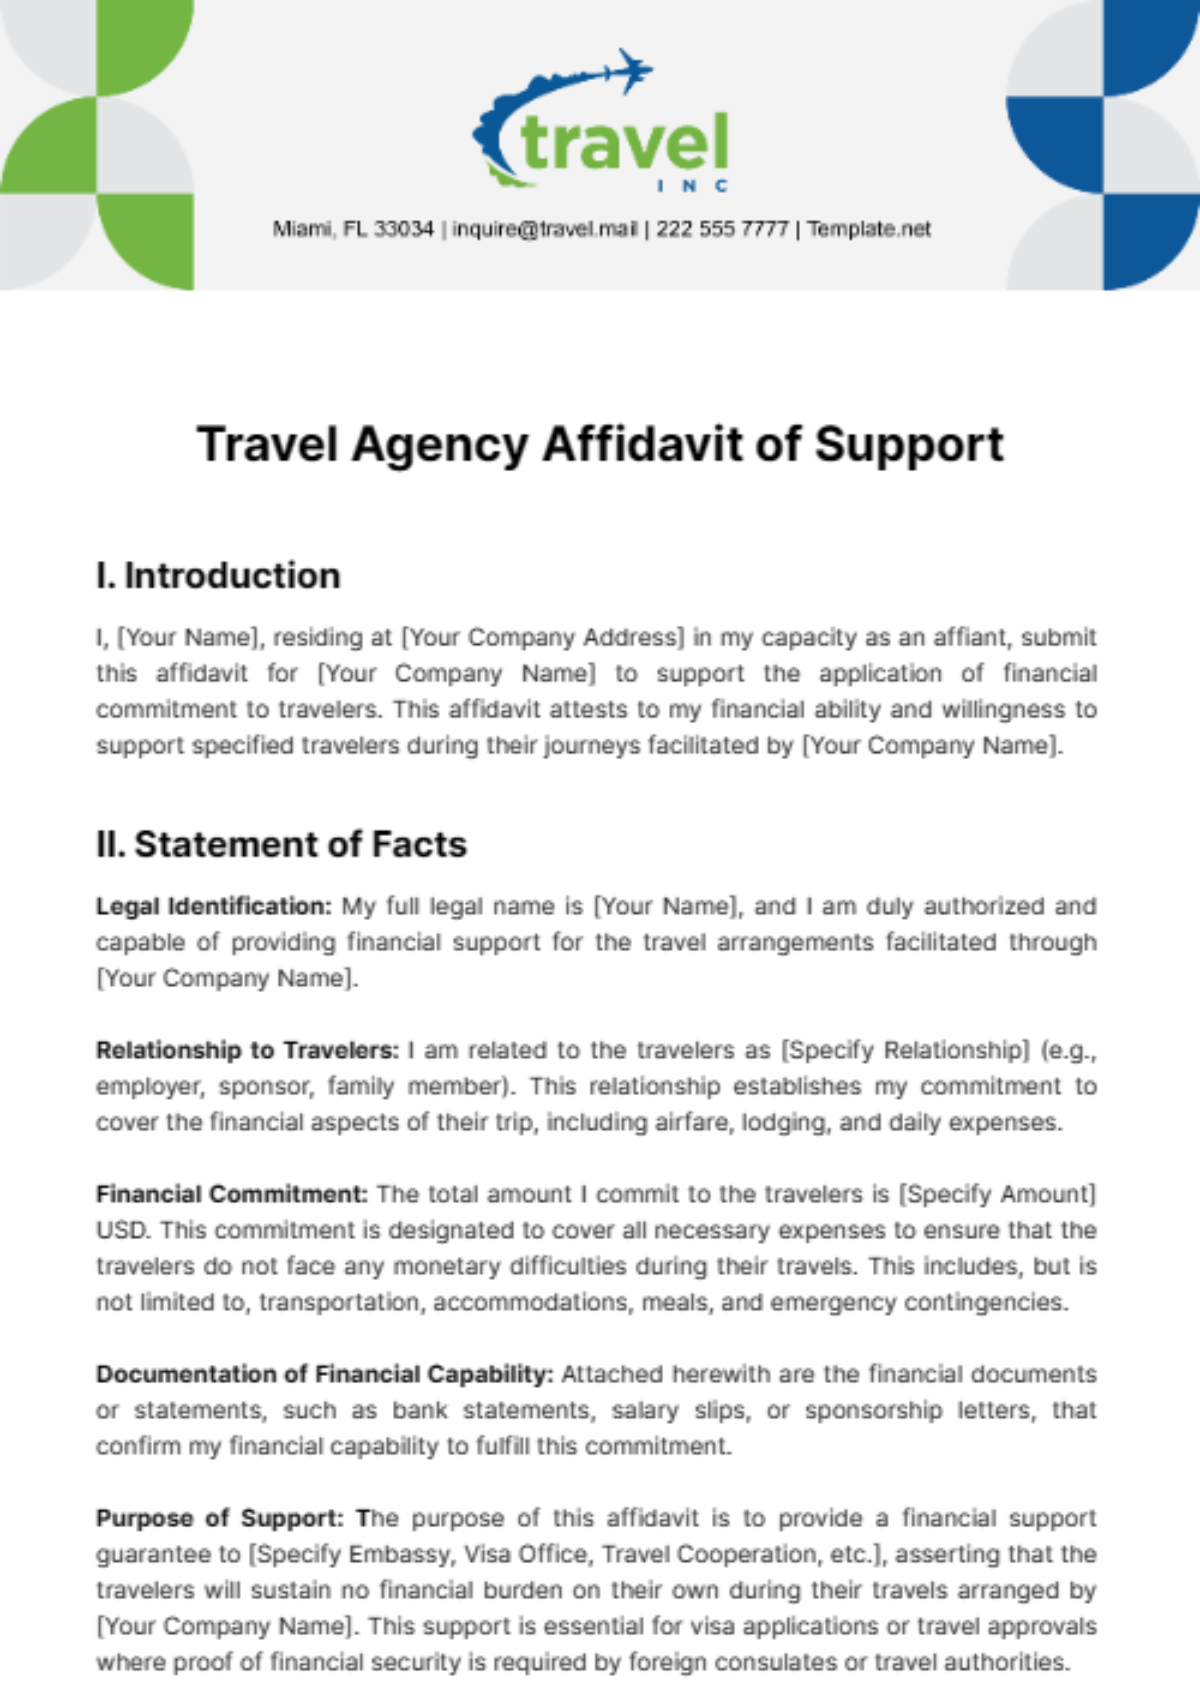 Travel Agency Affidavit of Support Template